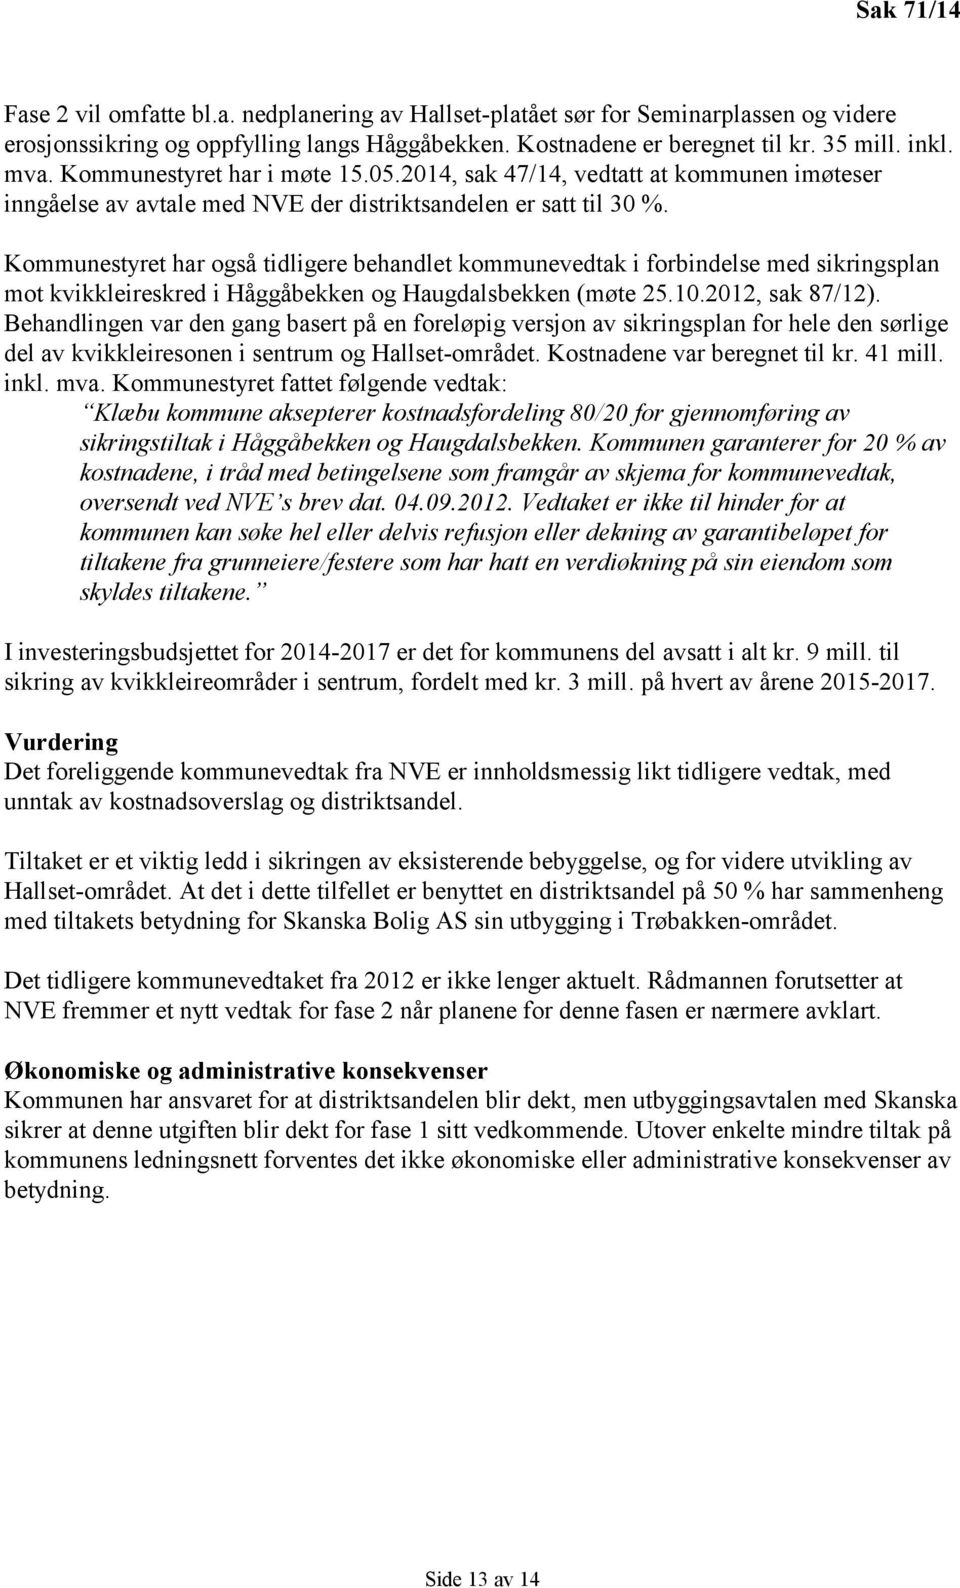 Kommunestyret har også tidligere behandlet kommunevedtak i forbindelse med sikringsplan mot kvikkleireskred i Håggåbekken og Haugdalsbekken (møte 25.10.2012, sak 87/12).